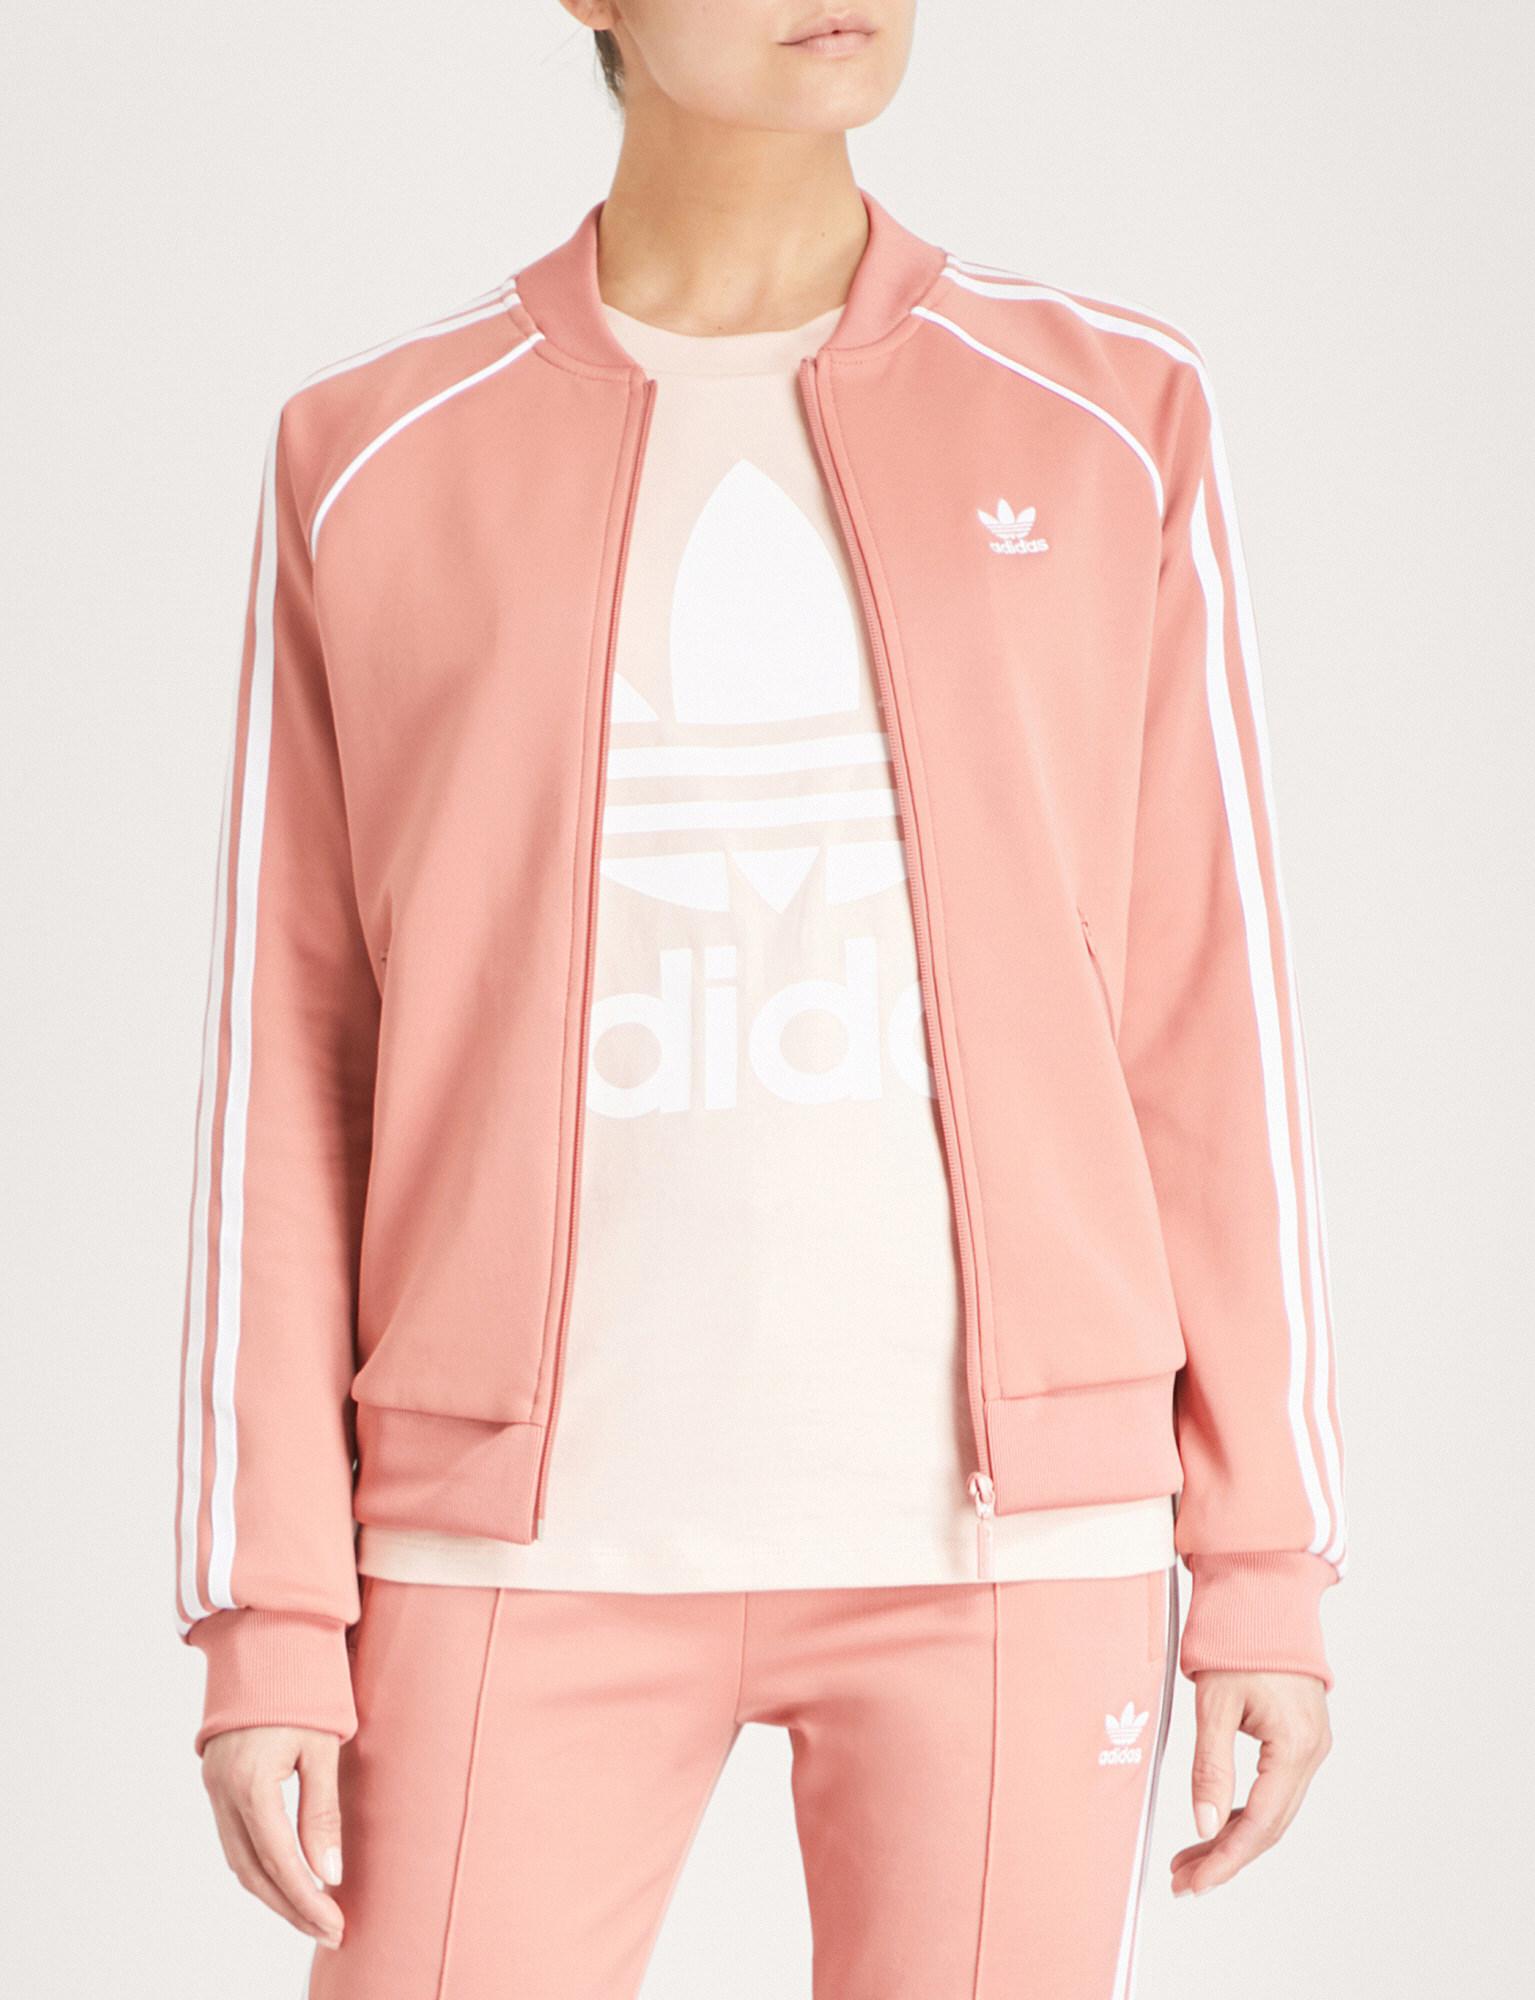 ash pink adidas shirt